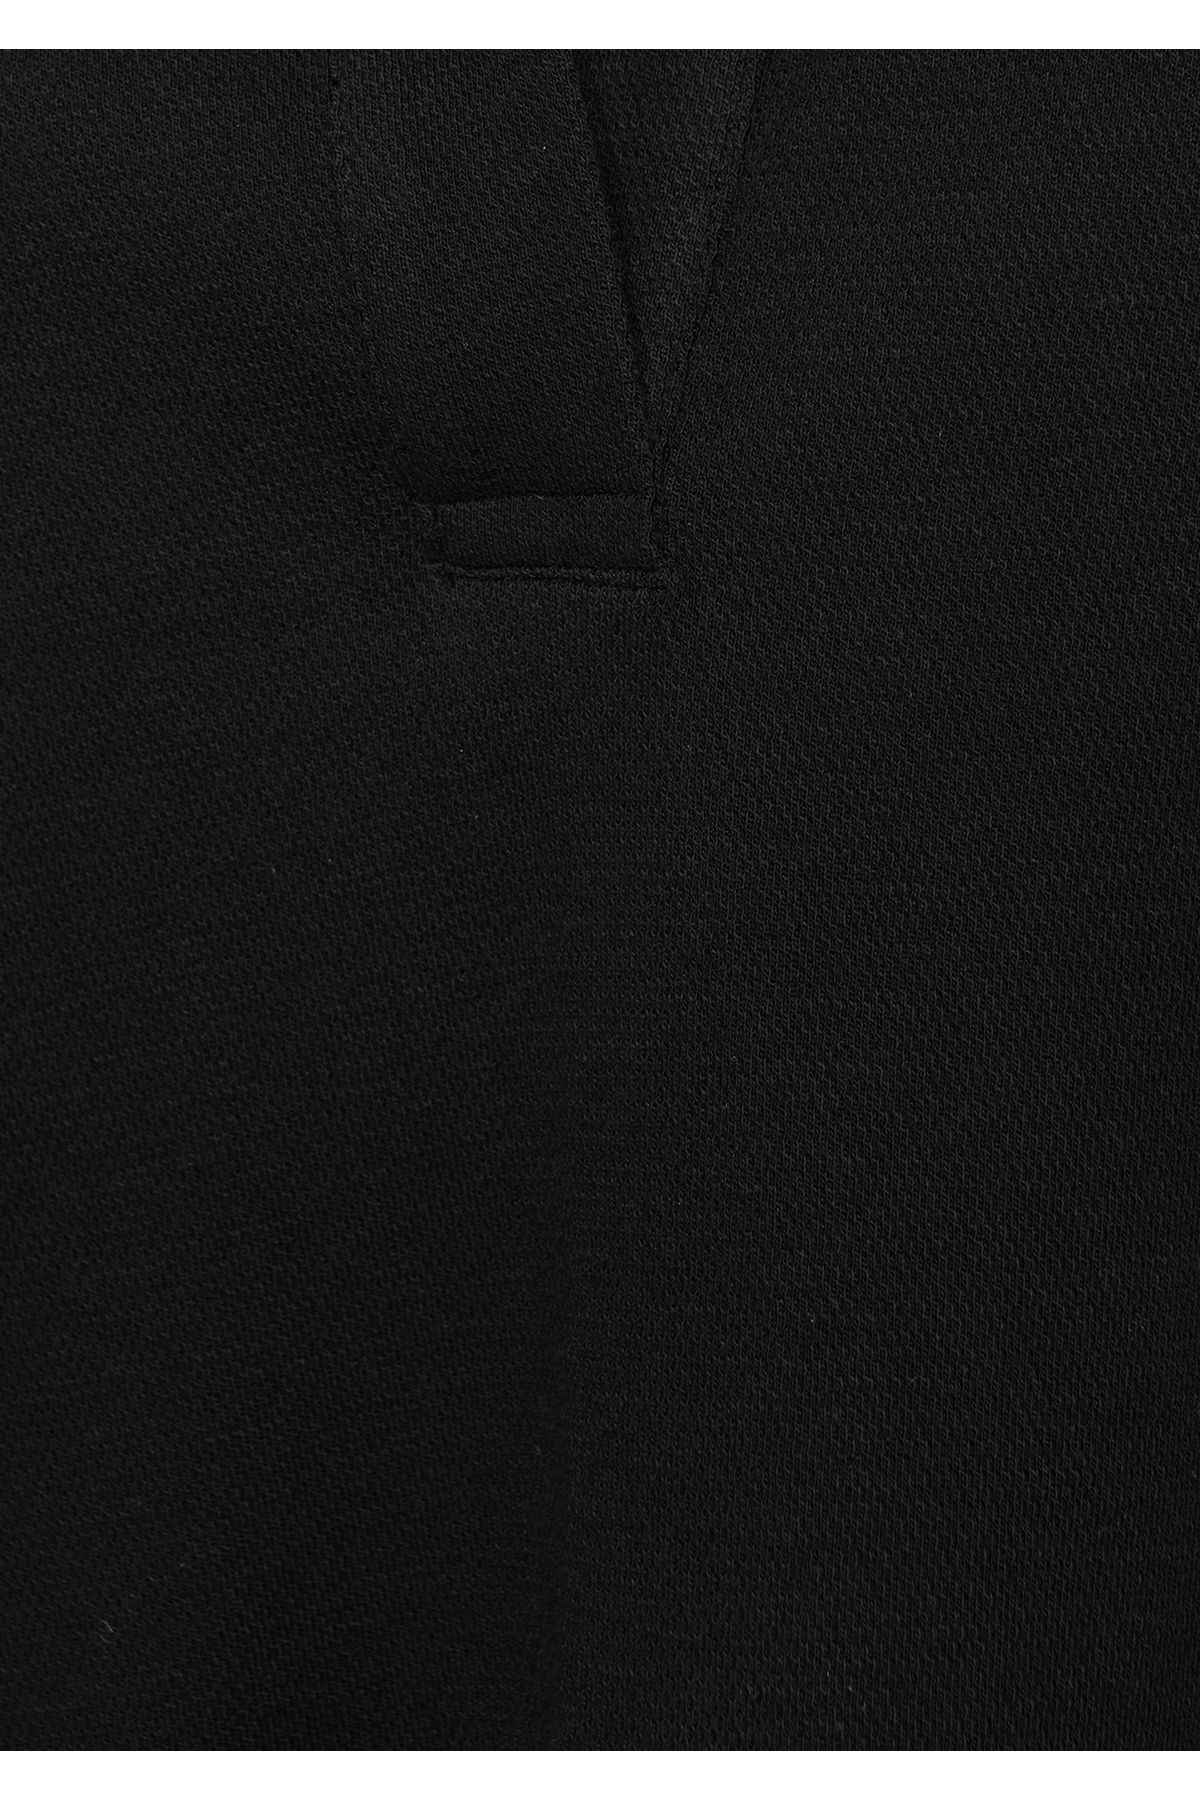 Mavi پیراهن سیاه 1611508-900 با کلاه